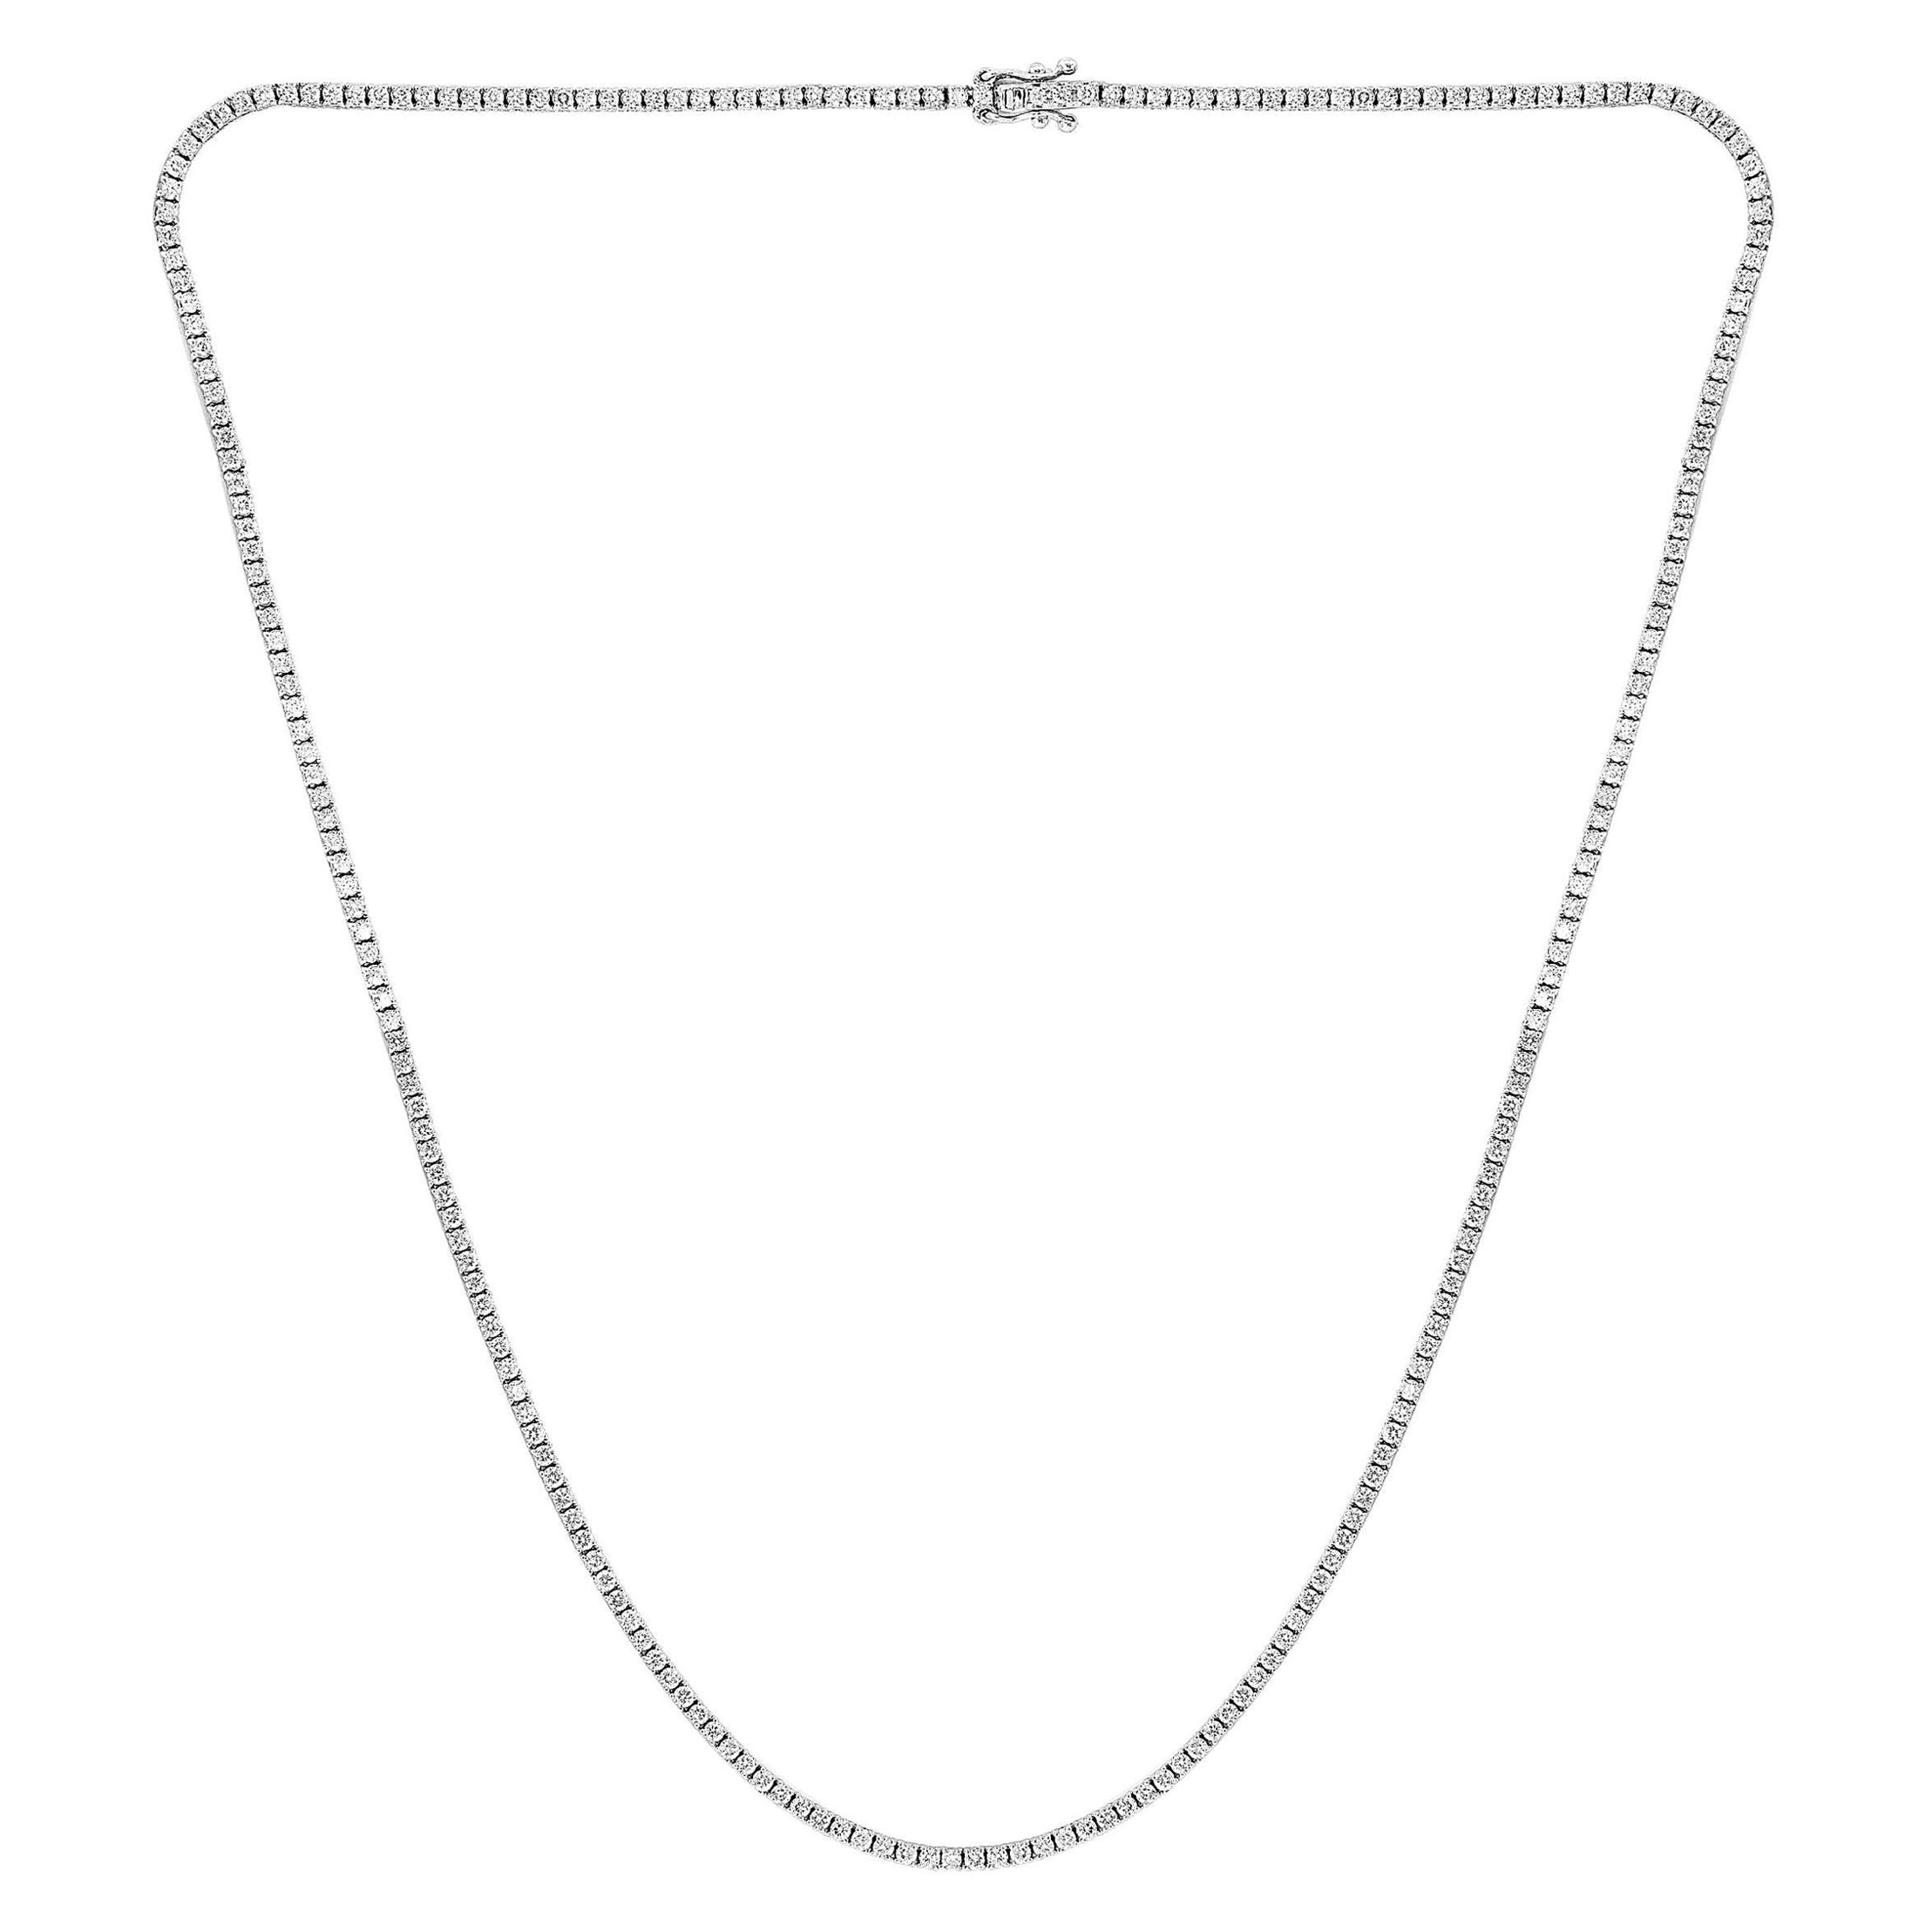 3.01 Carat Diamond Tennis Necklace in 14K White Gold